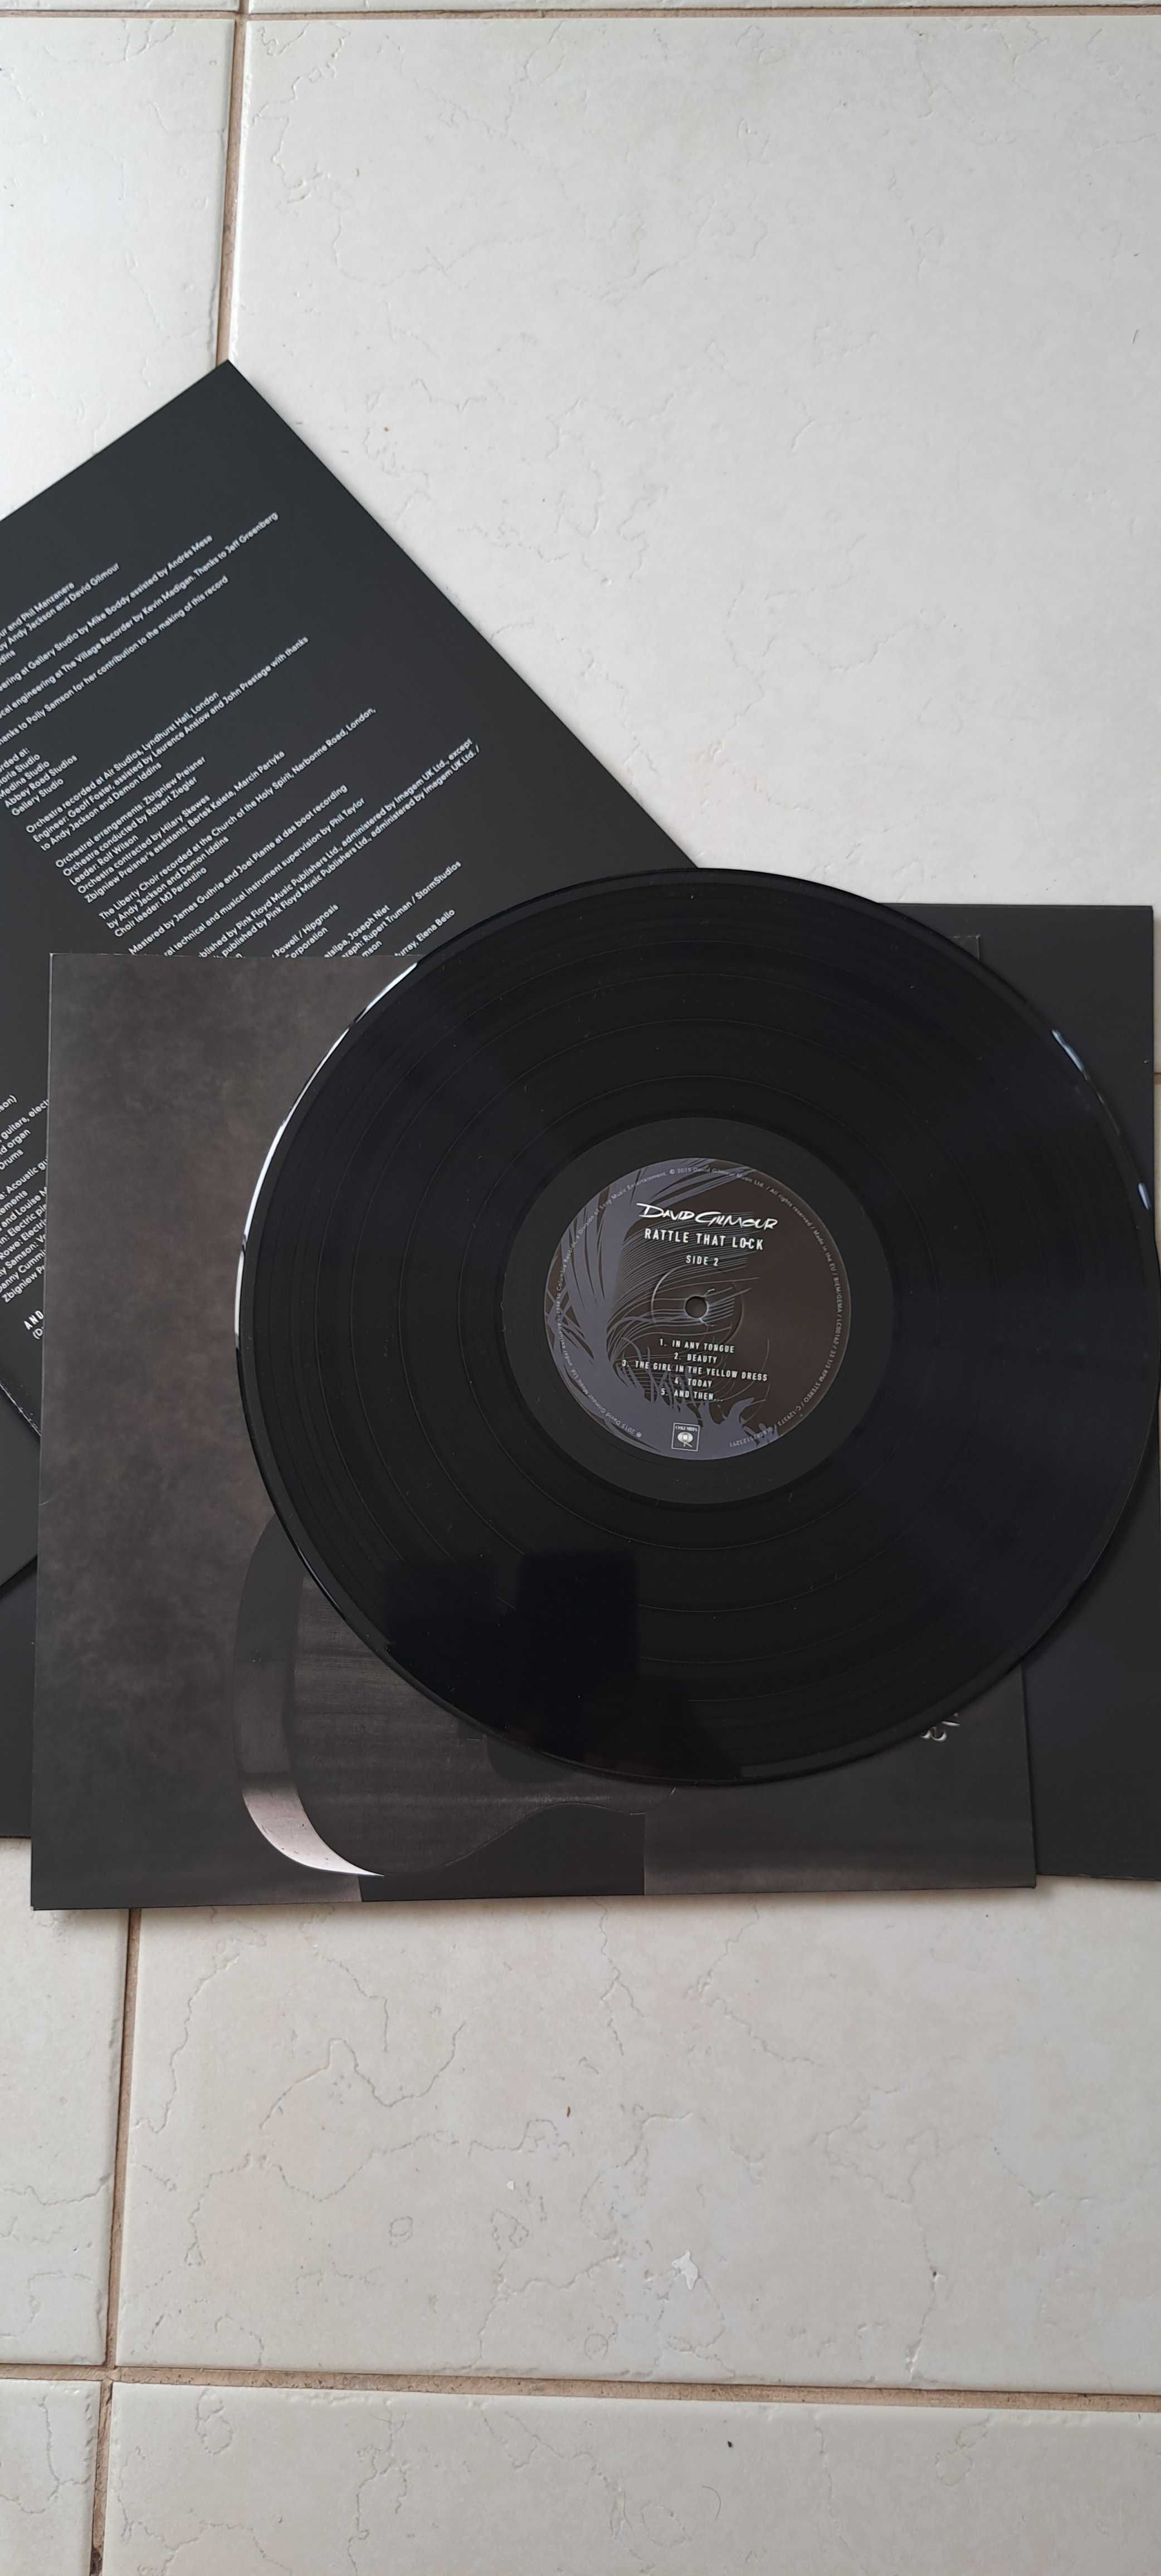 David Gilmour - Rattle that lock, vinyl, 2015